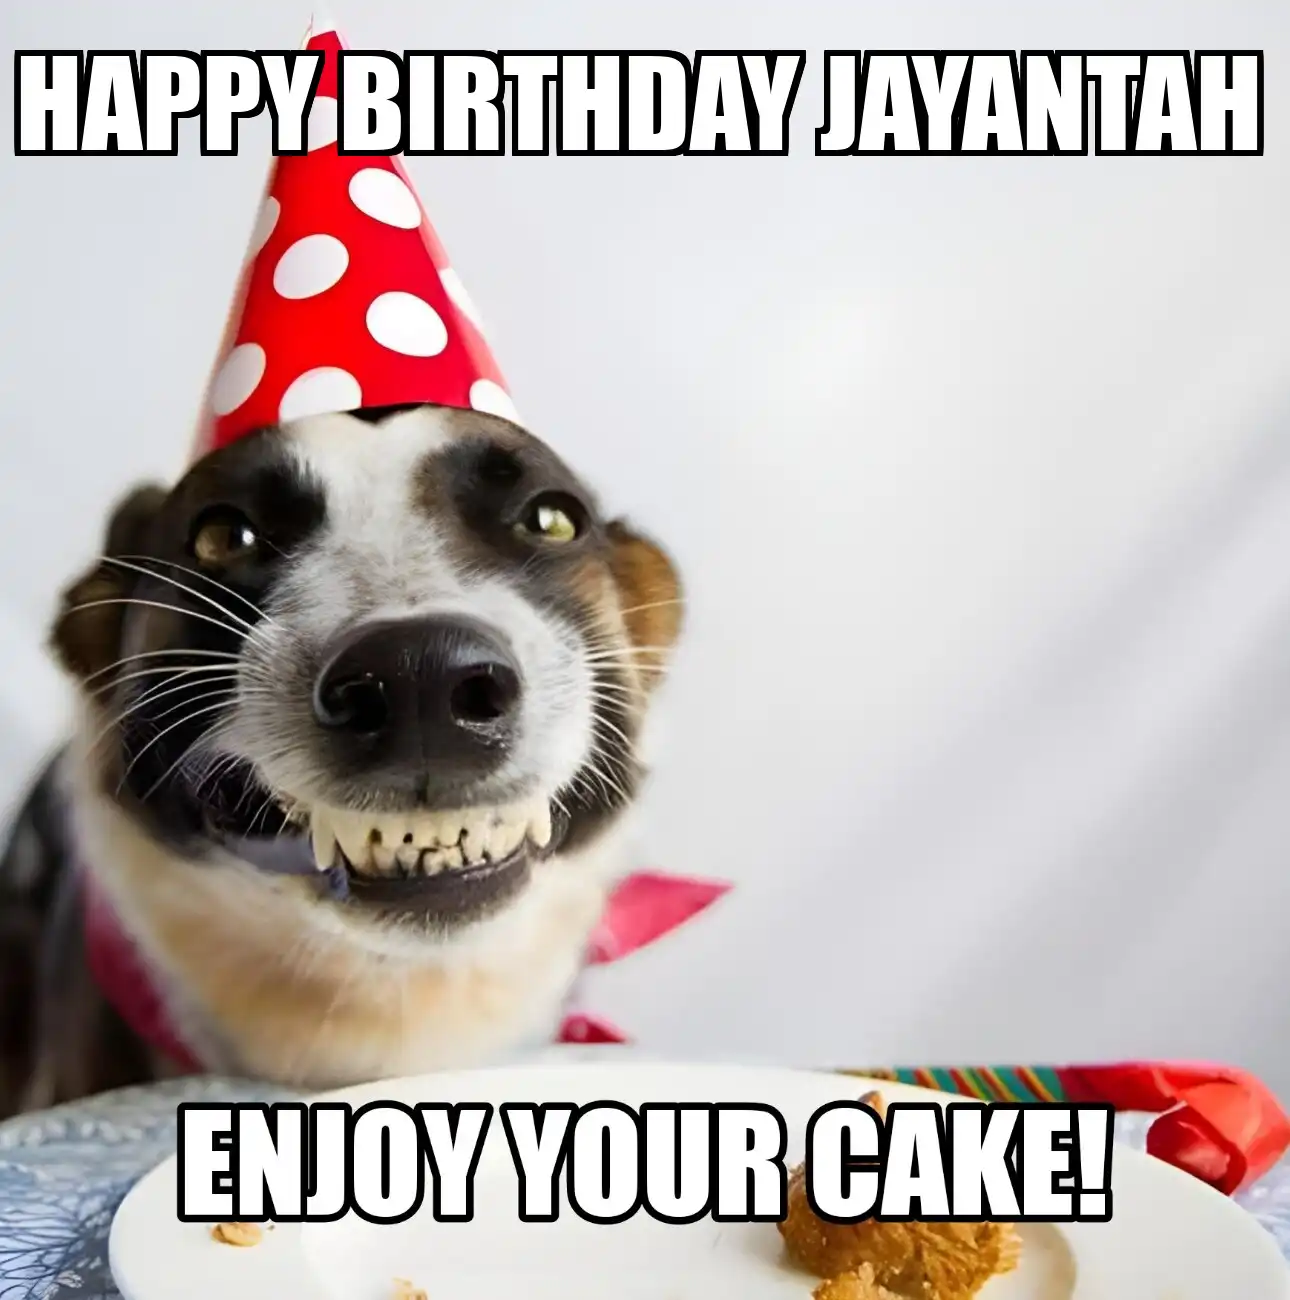 Happy Birthday Jayantah Enjoy Your Cake Dog Meme